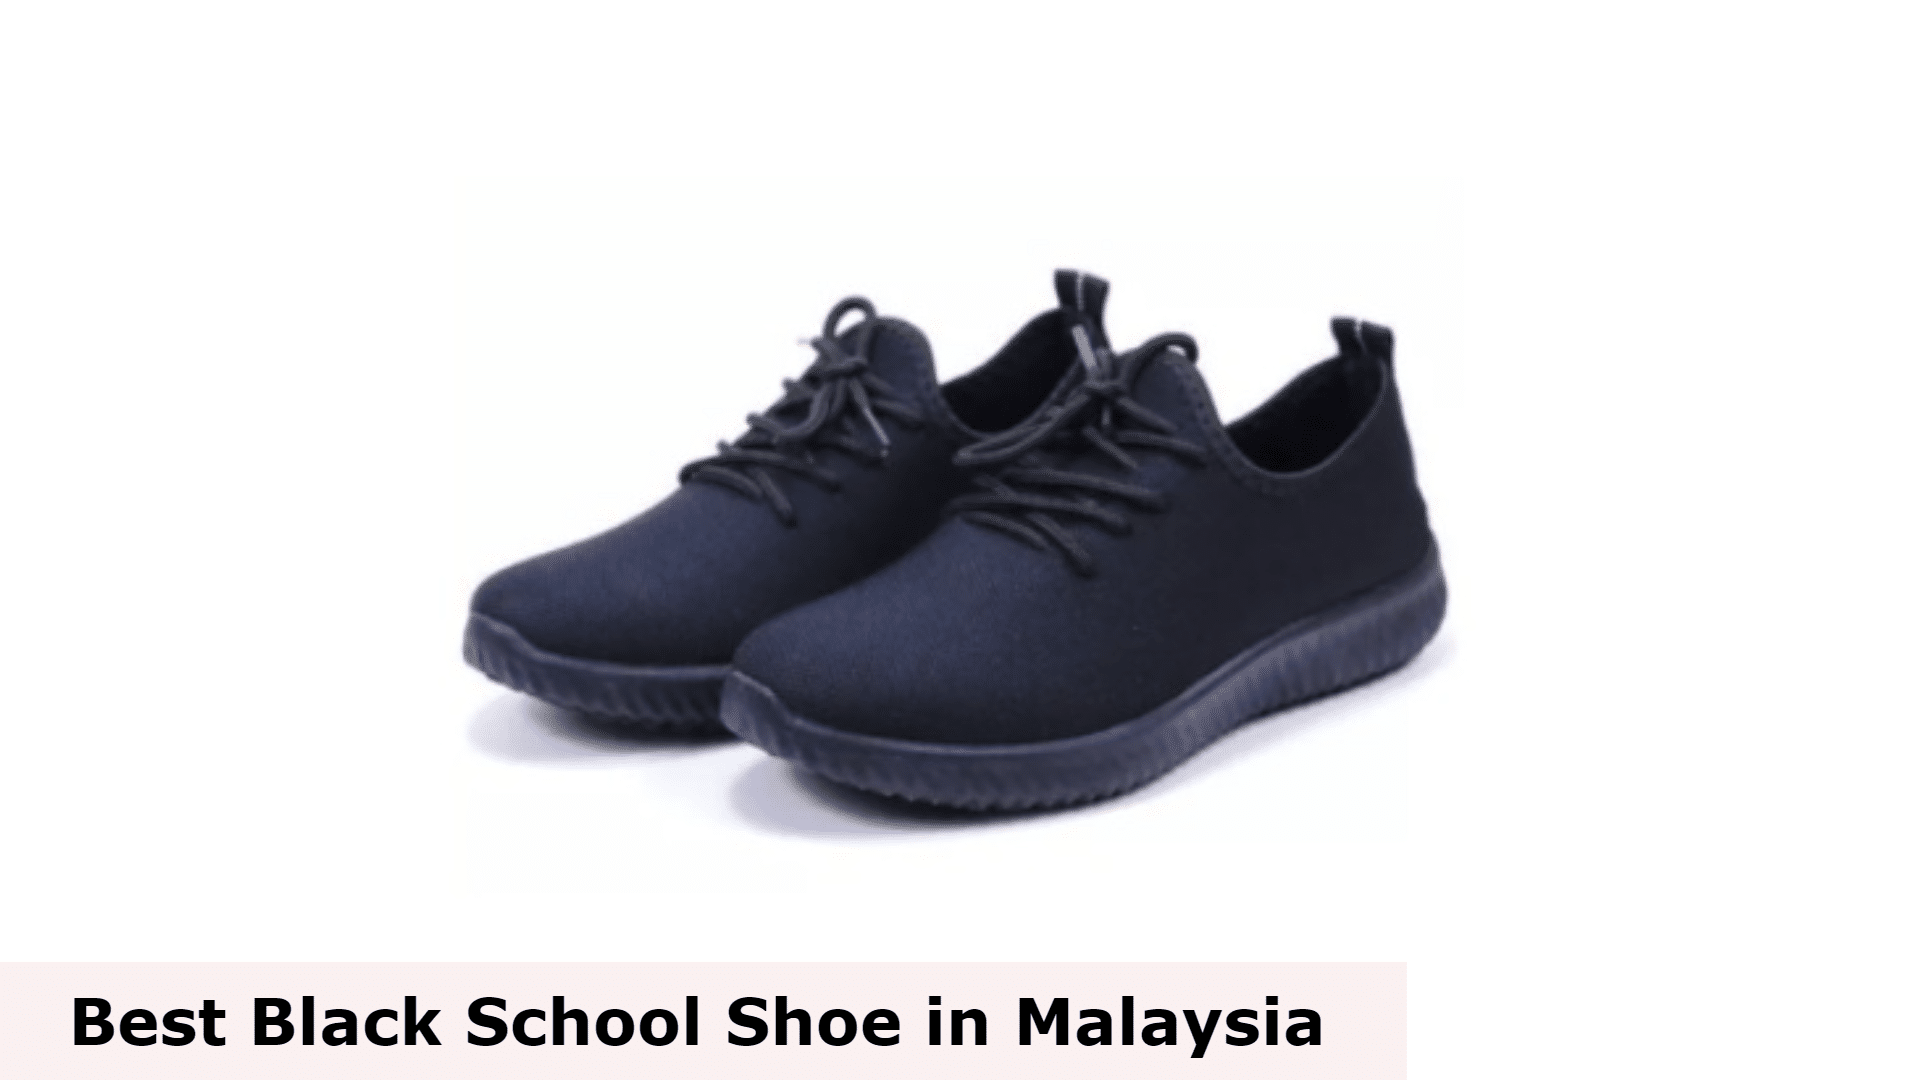 SmartChoice Alpha Unisex Sneaker  - Best Black School Shoe in Malaysia, Top 5 Black School Shoe in Malaysia,
Black school shoe in malaysia,
Which is the best black school shoe brand in malayisa,Black school shoe review malaysia, what is the best brand of school shoe to get in Malaysia,List of the best black school shoe in malaysia,Choosing the best black school shoe malaysia 2022,